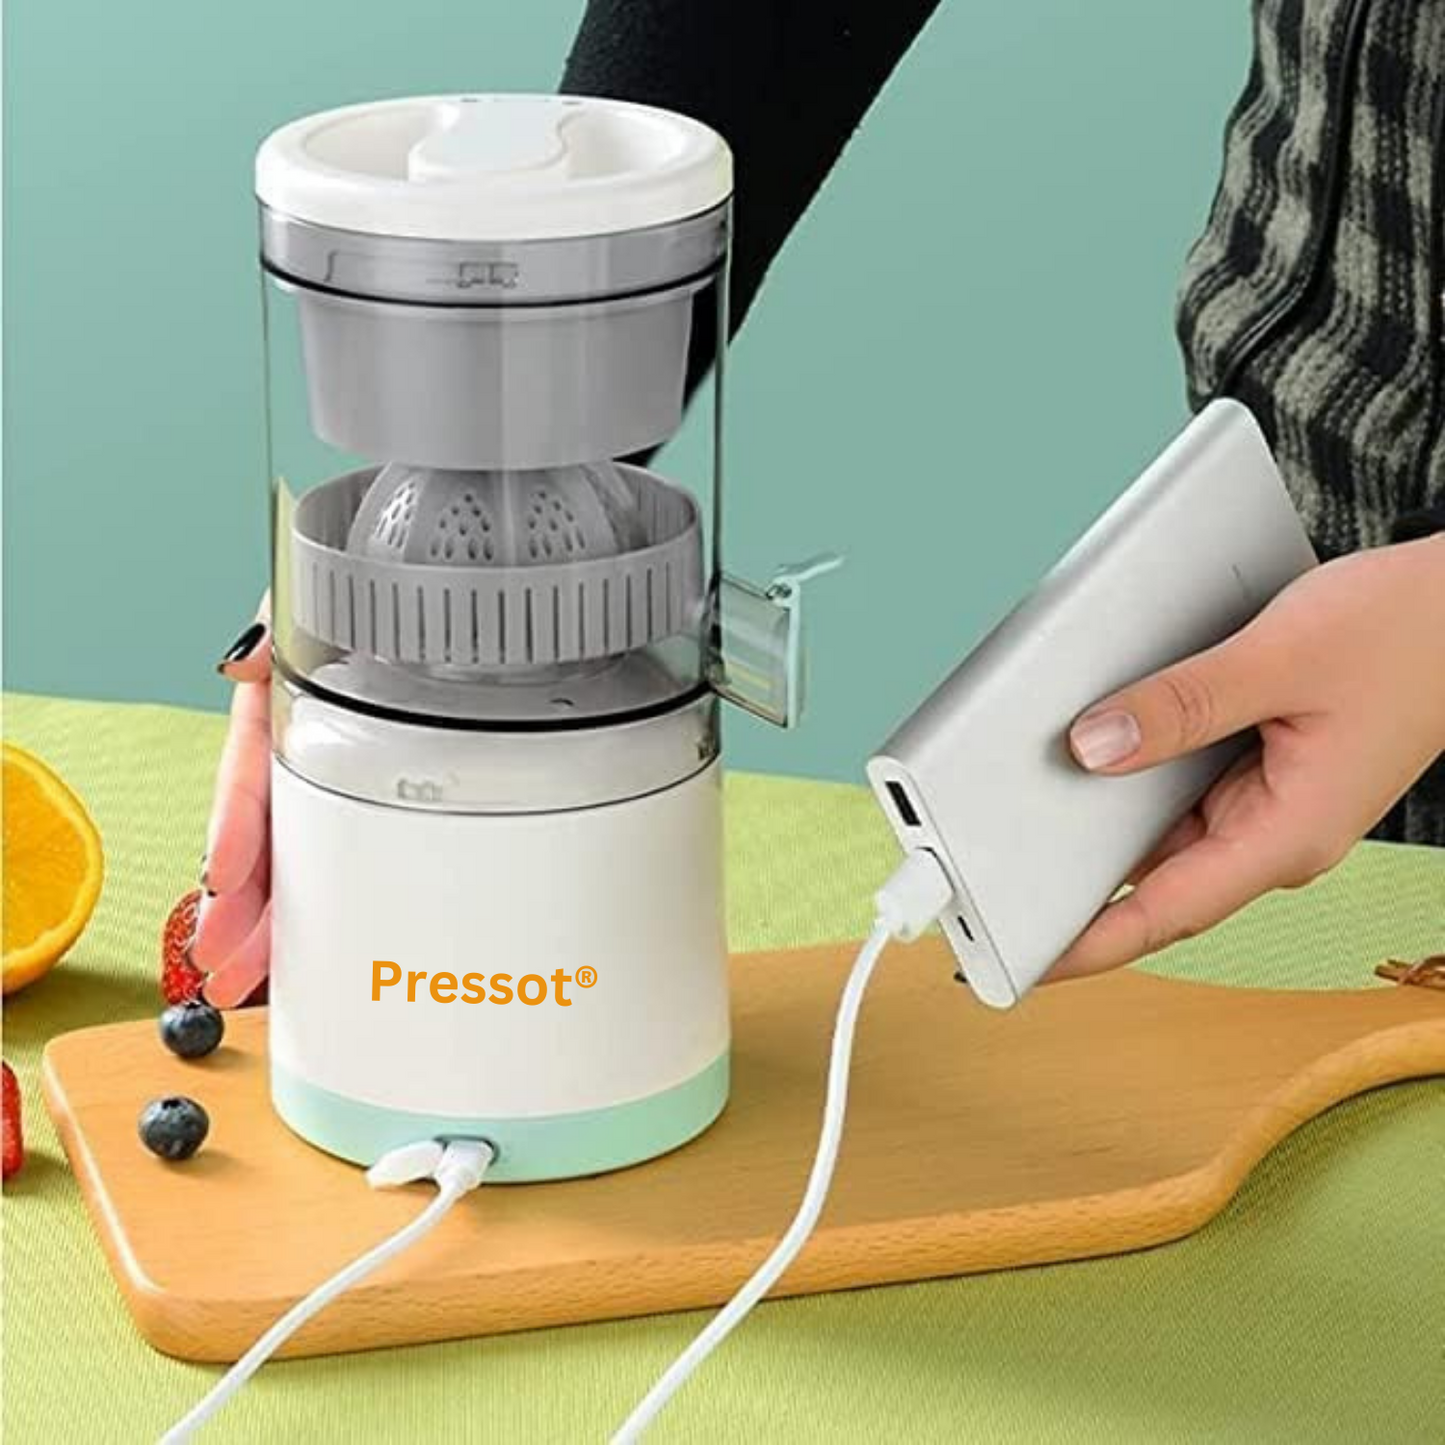 Pressot™ Rechargeable Portable  Juicer